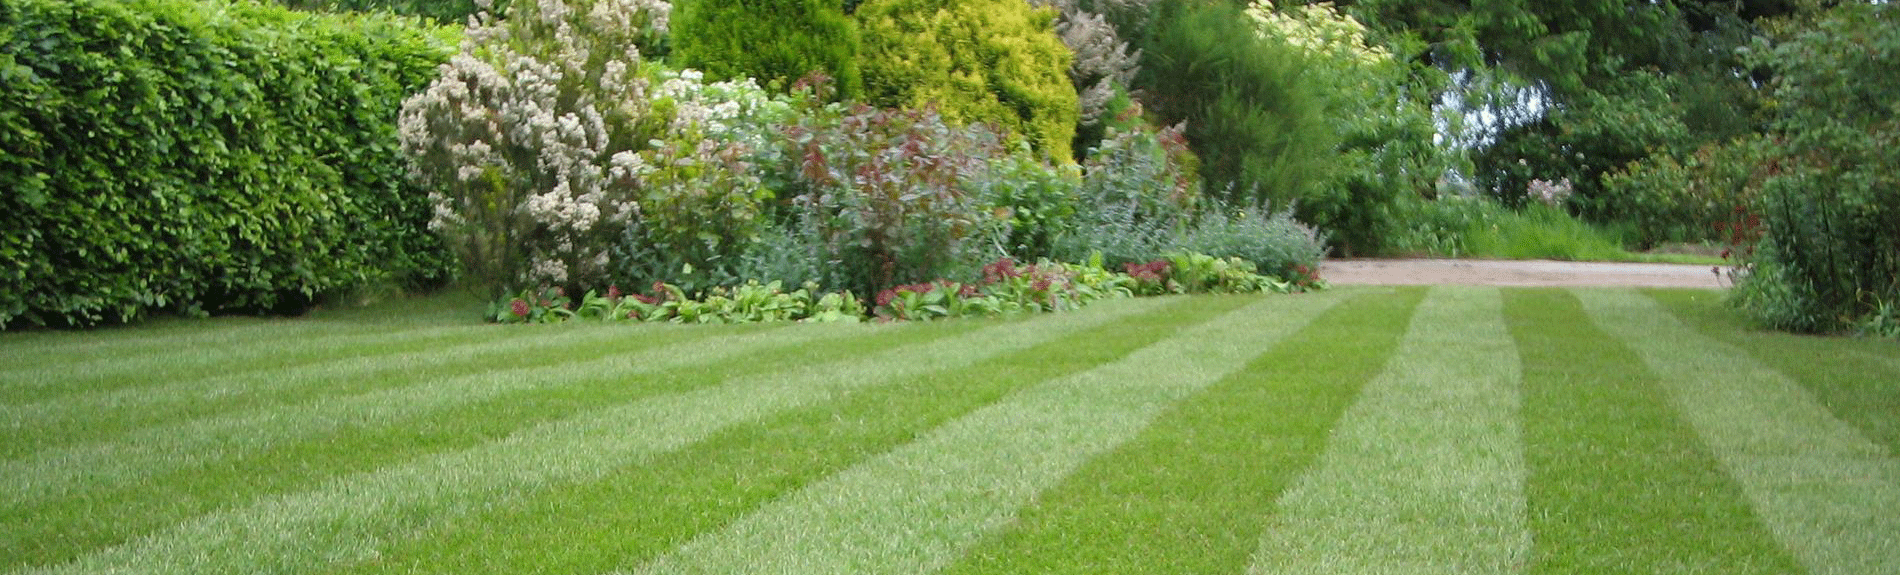 Broadleaf Weed Control in the Lawn